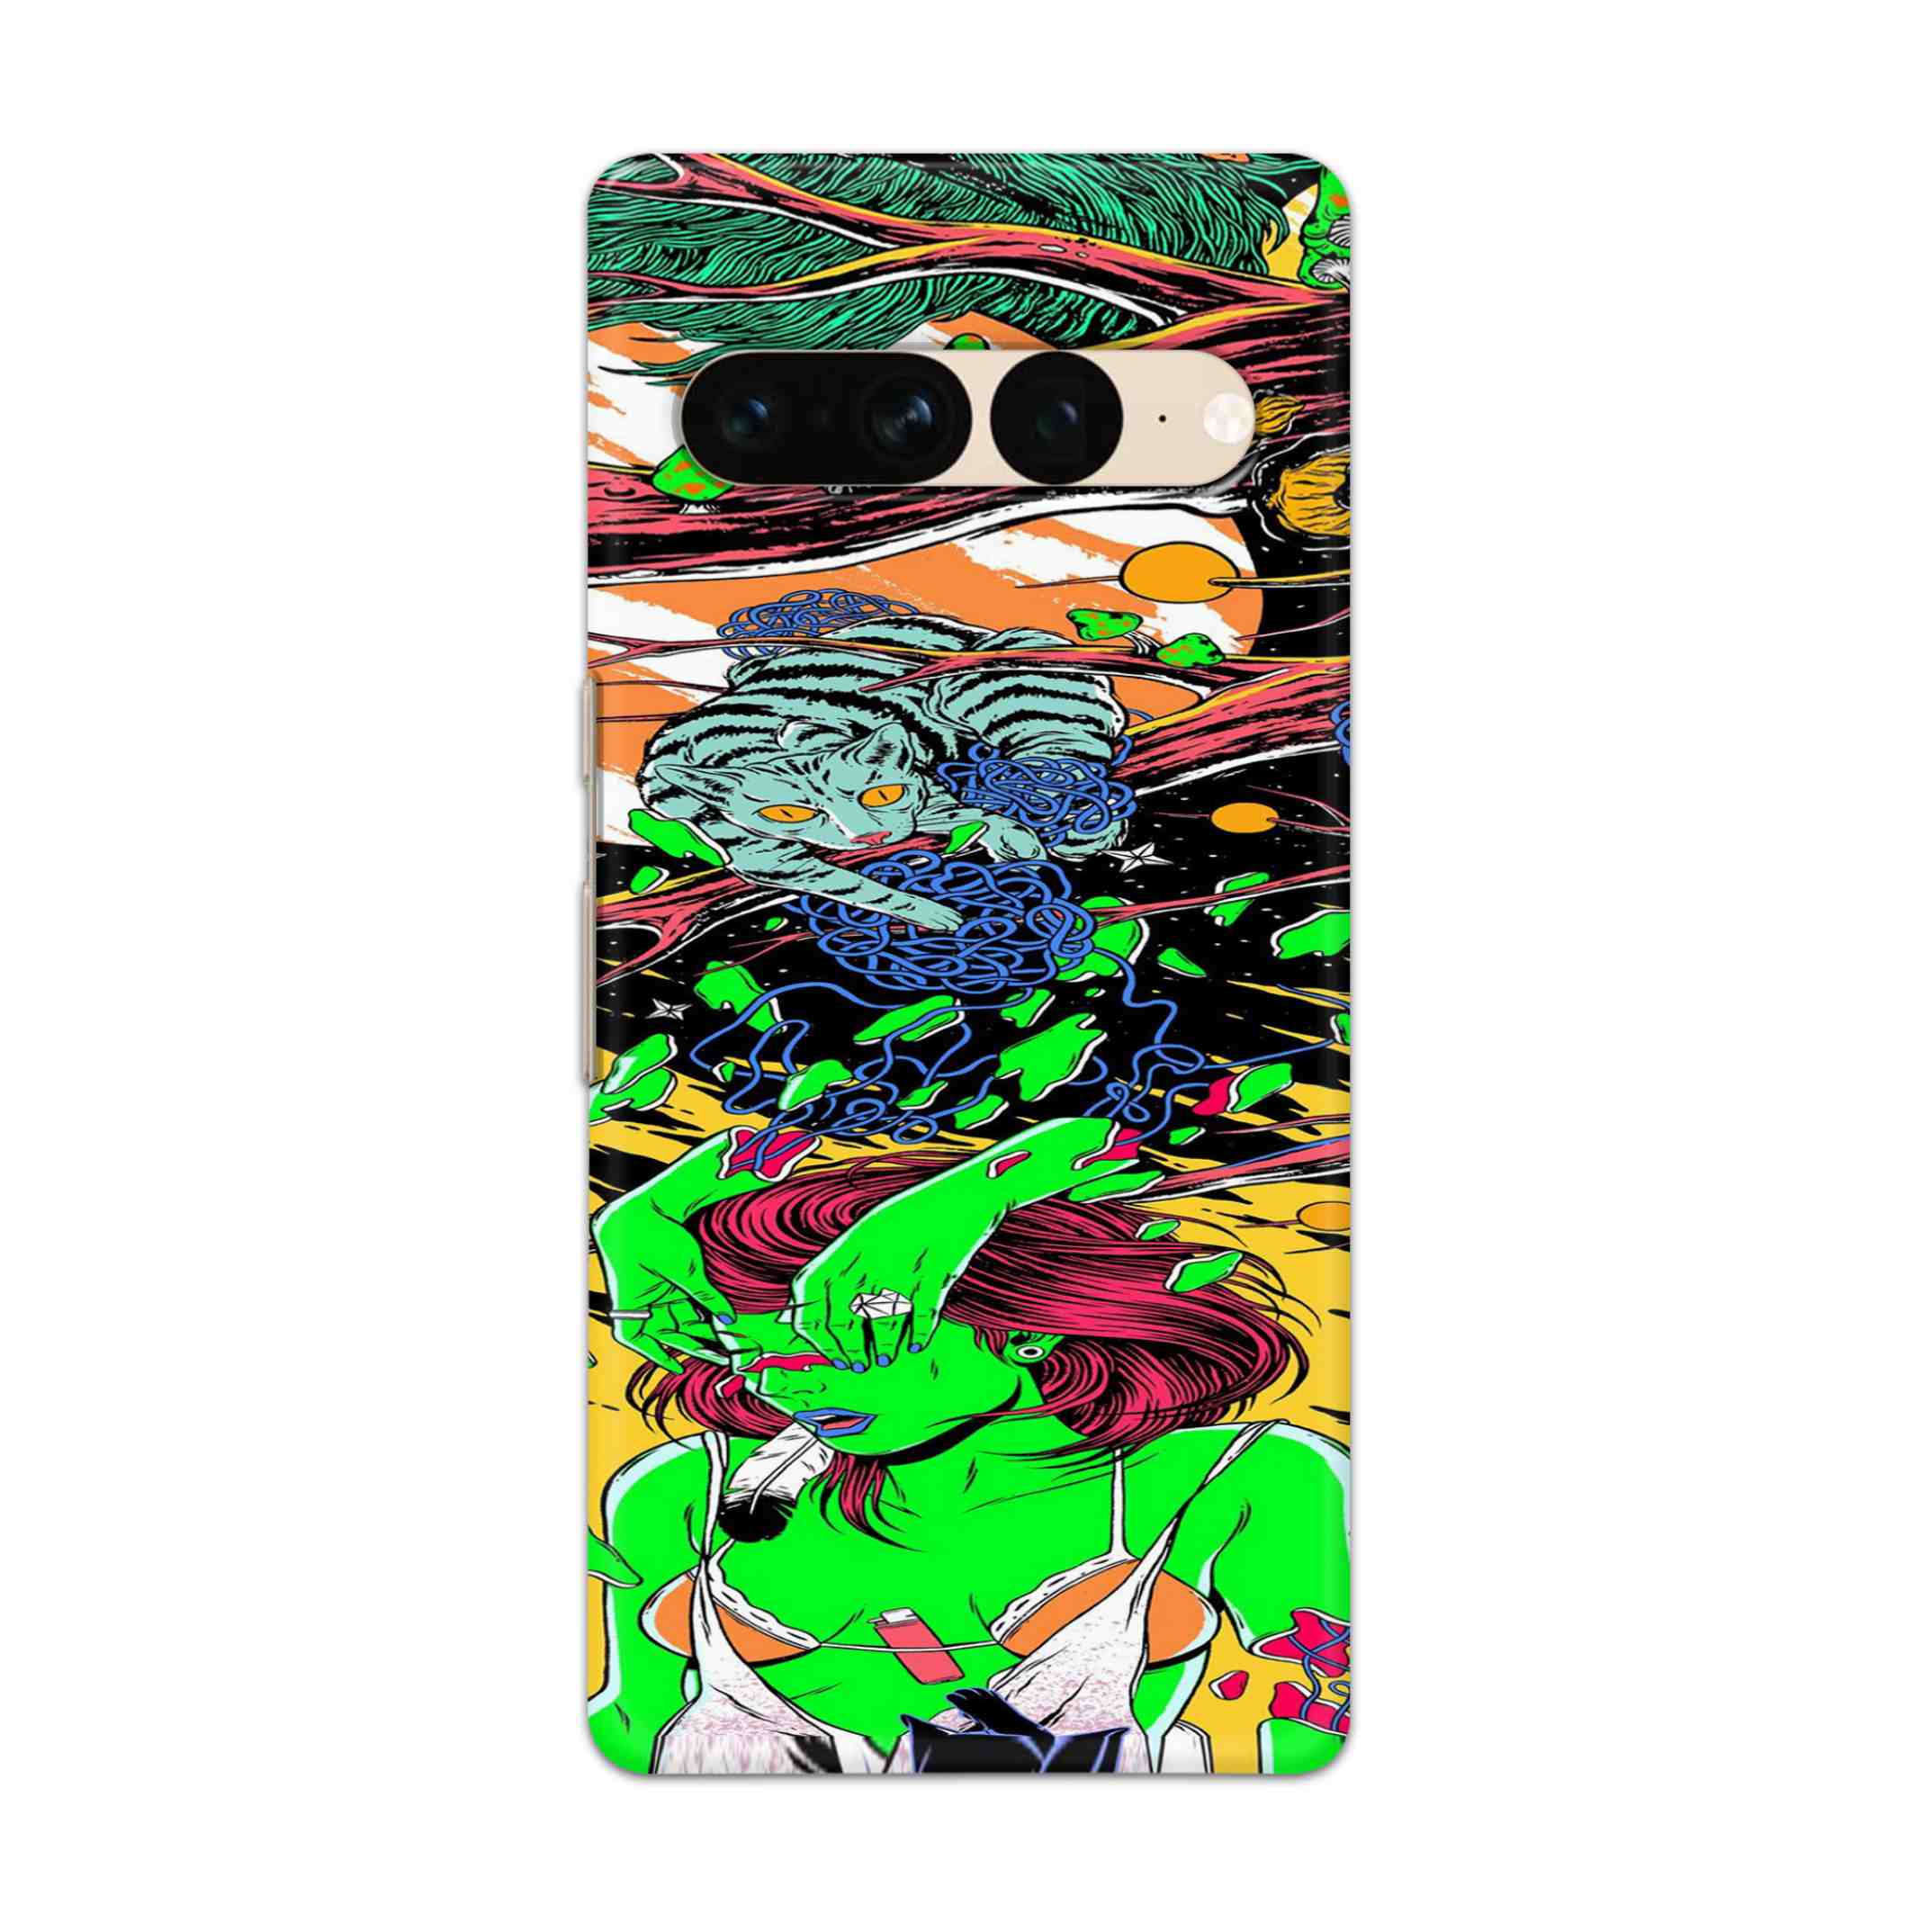 Buy Green Girl Art Hard Back Mobile Phone Case Cover For Google Pixel 7 Pro Online